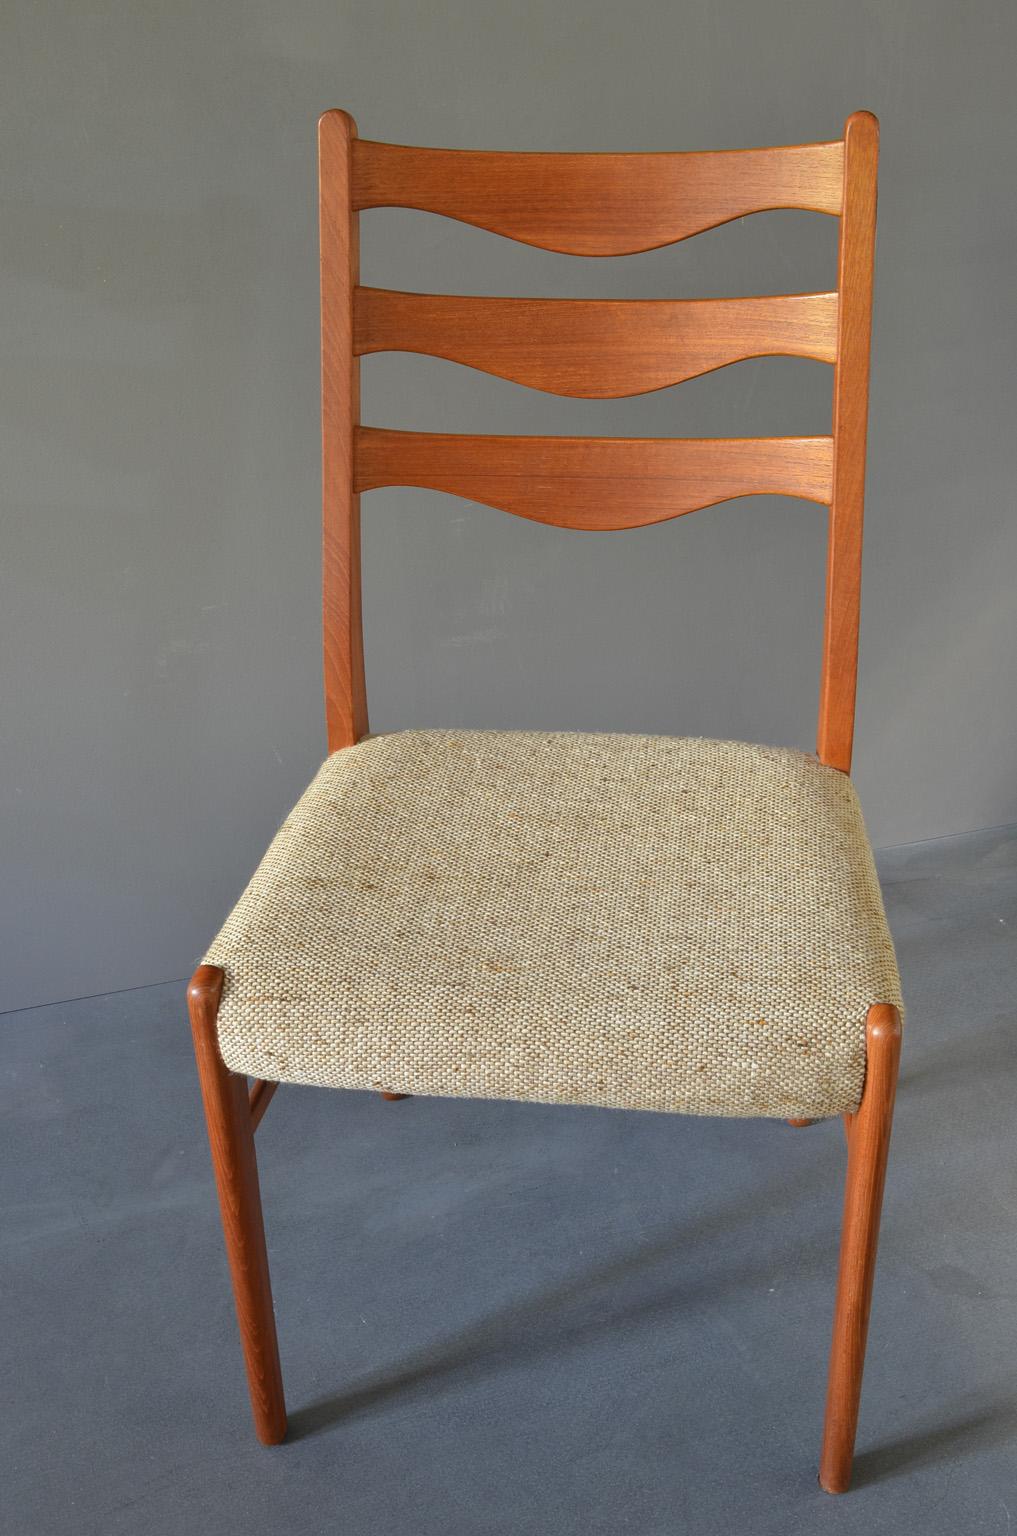 Set of 6 Danish brown teak dining chairs by Arne Wahl Iversen for Glyngøre Stolefabrik, 1960s, Denmark.